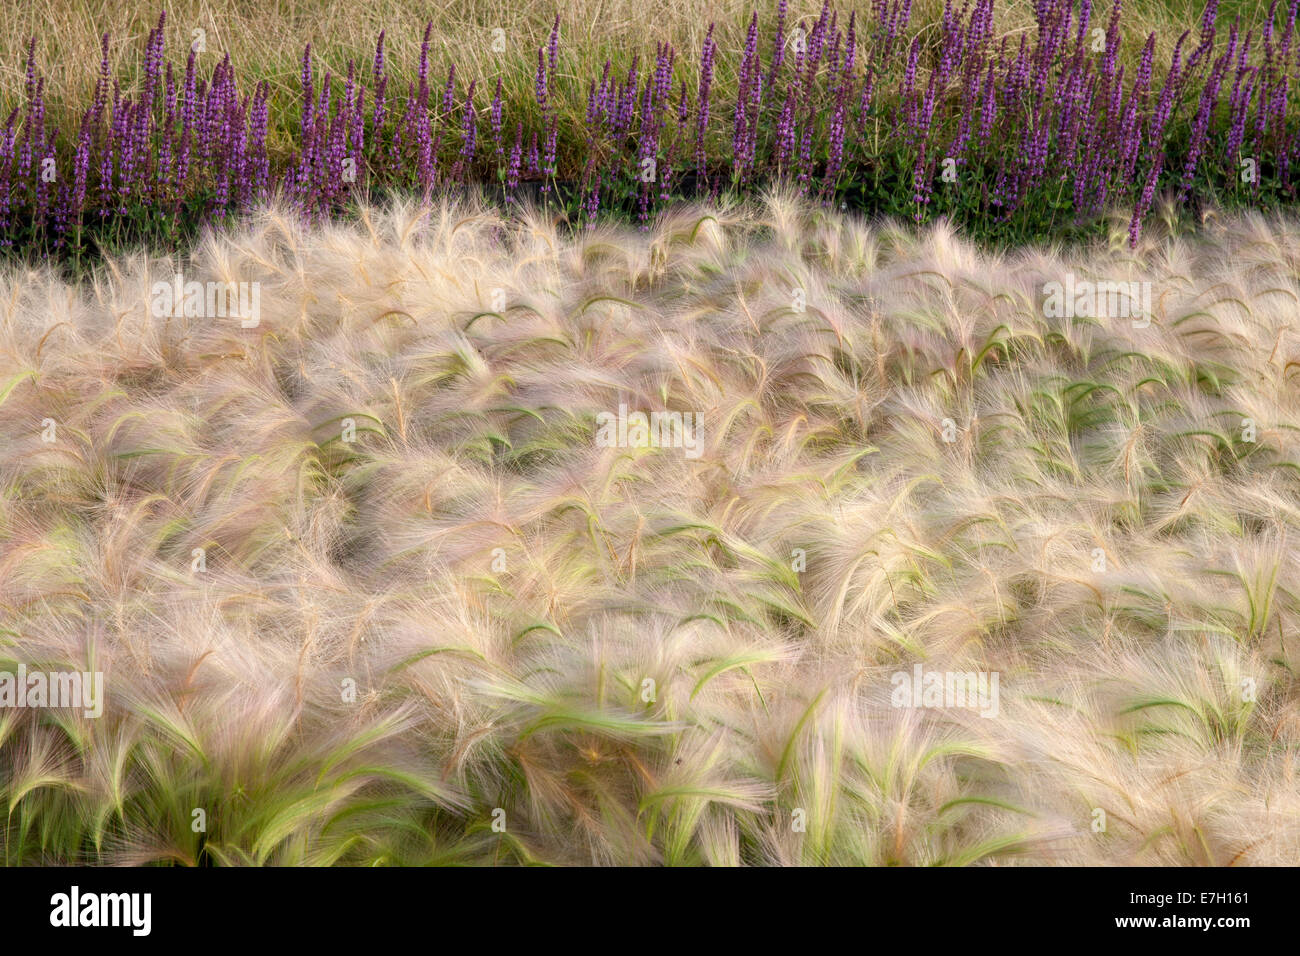 Garden - See the Wind - ornamental grass grasses border planting of Hordeum Jubatum ornamental barley grass Salvia nemorosa 'Amethyst' - UK Stock Photo